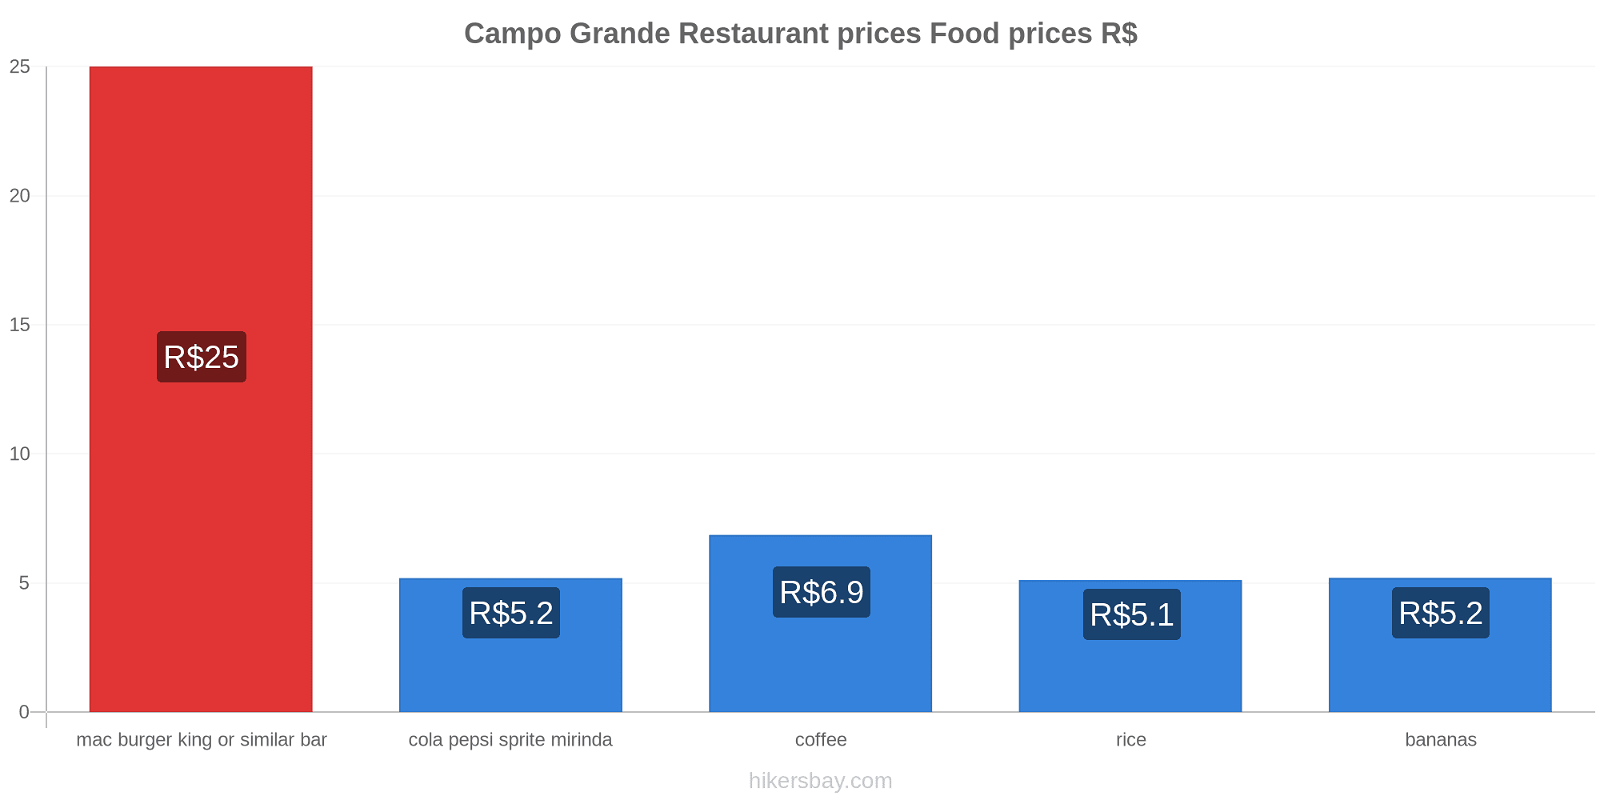 Campo Grande price changes hikersbay.com